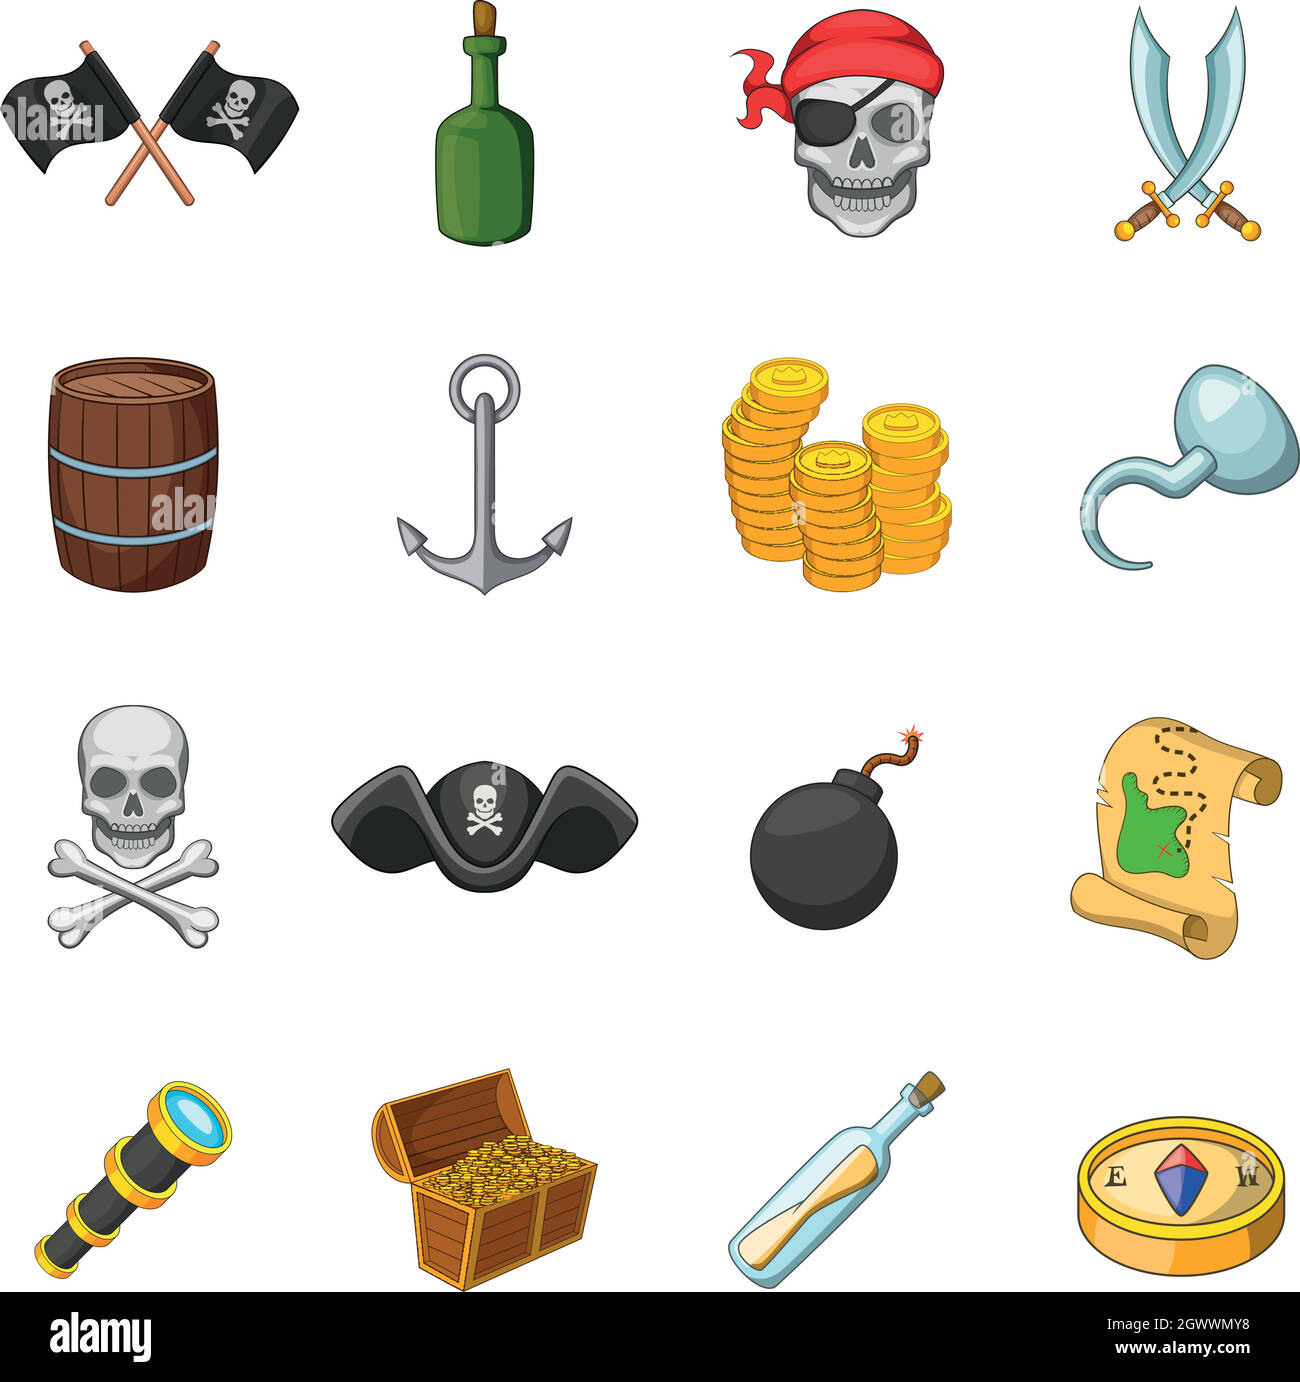 https://c8.alamy.com/comp/2GWWMY8/pirate-culture-symbols-icons-set-cartoon-style-2GWWMY8.jpg